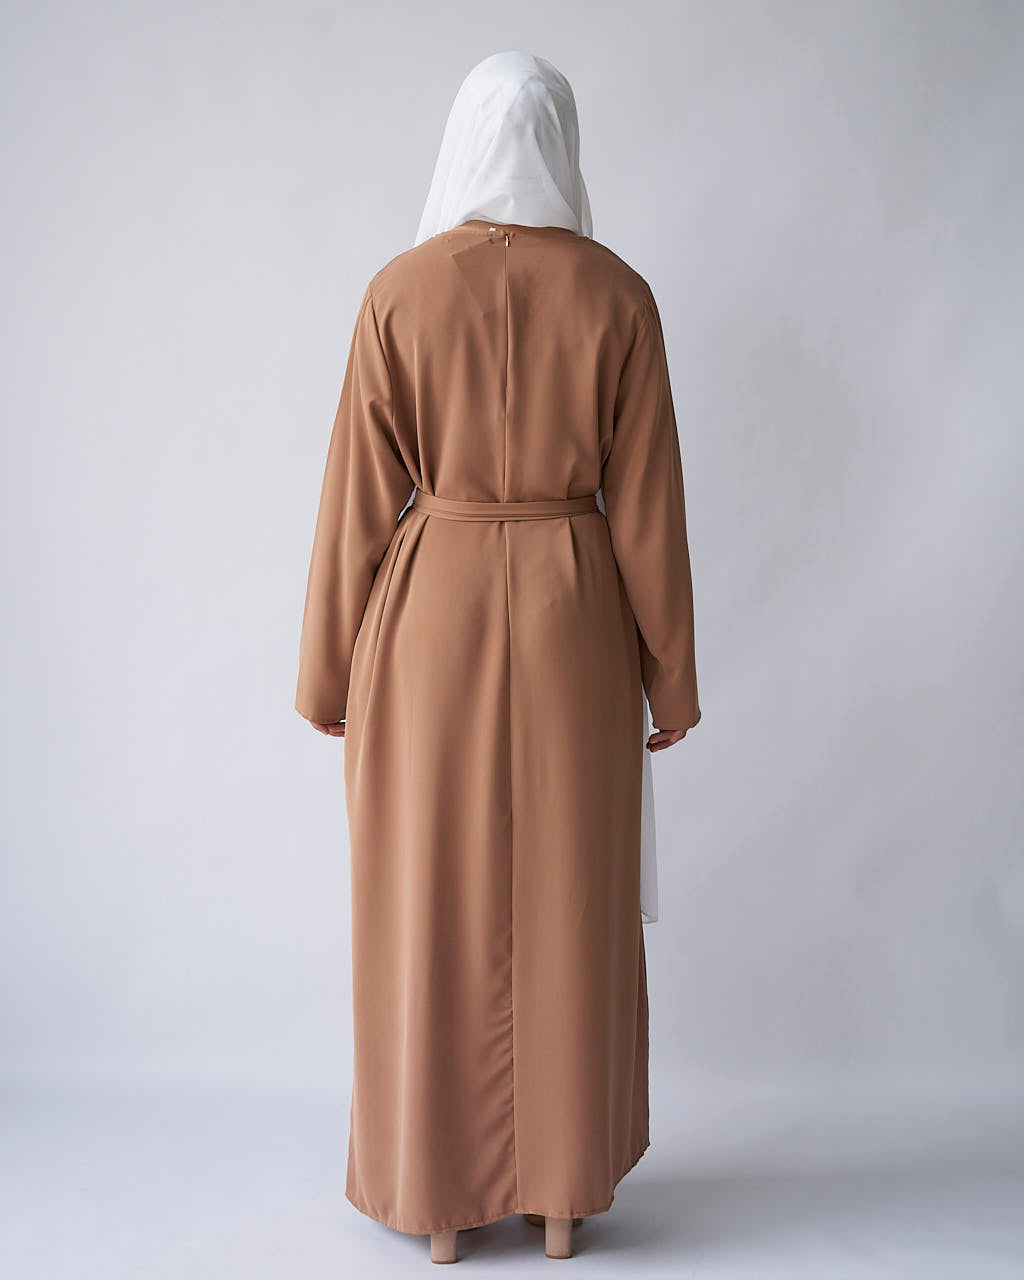 Essential Abaya - Brown - Essential Abaya - Fajr Noor